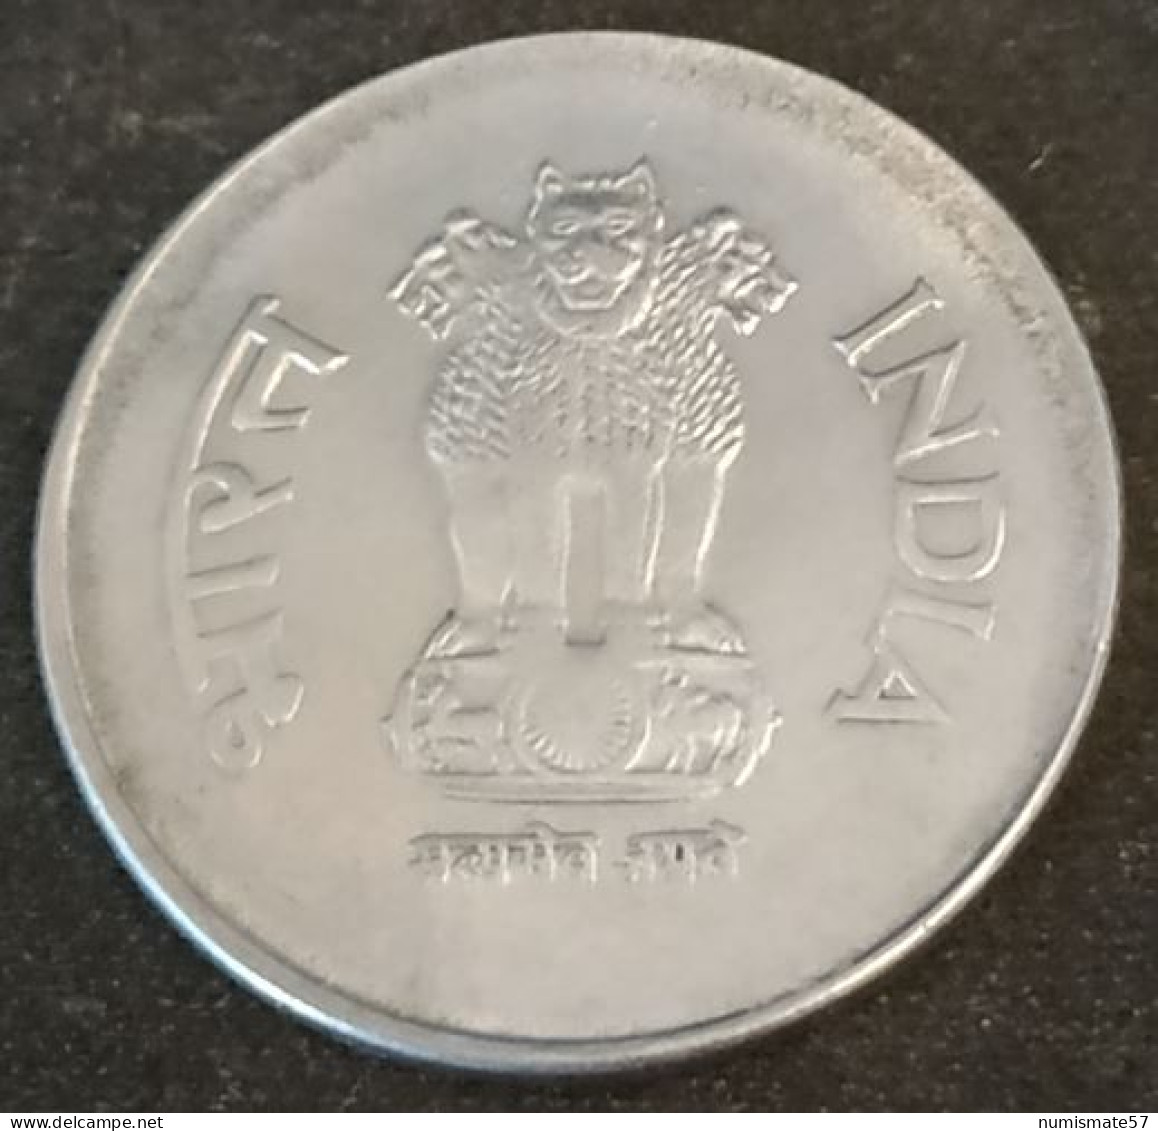 INDE - INDIA - 1 RUPEE 2003 * - KM 92.2 - ( Hyderabad ) - India